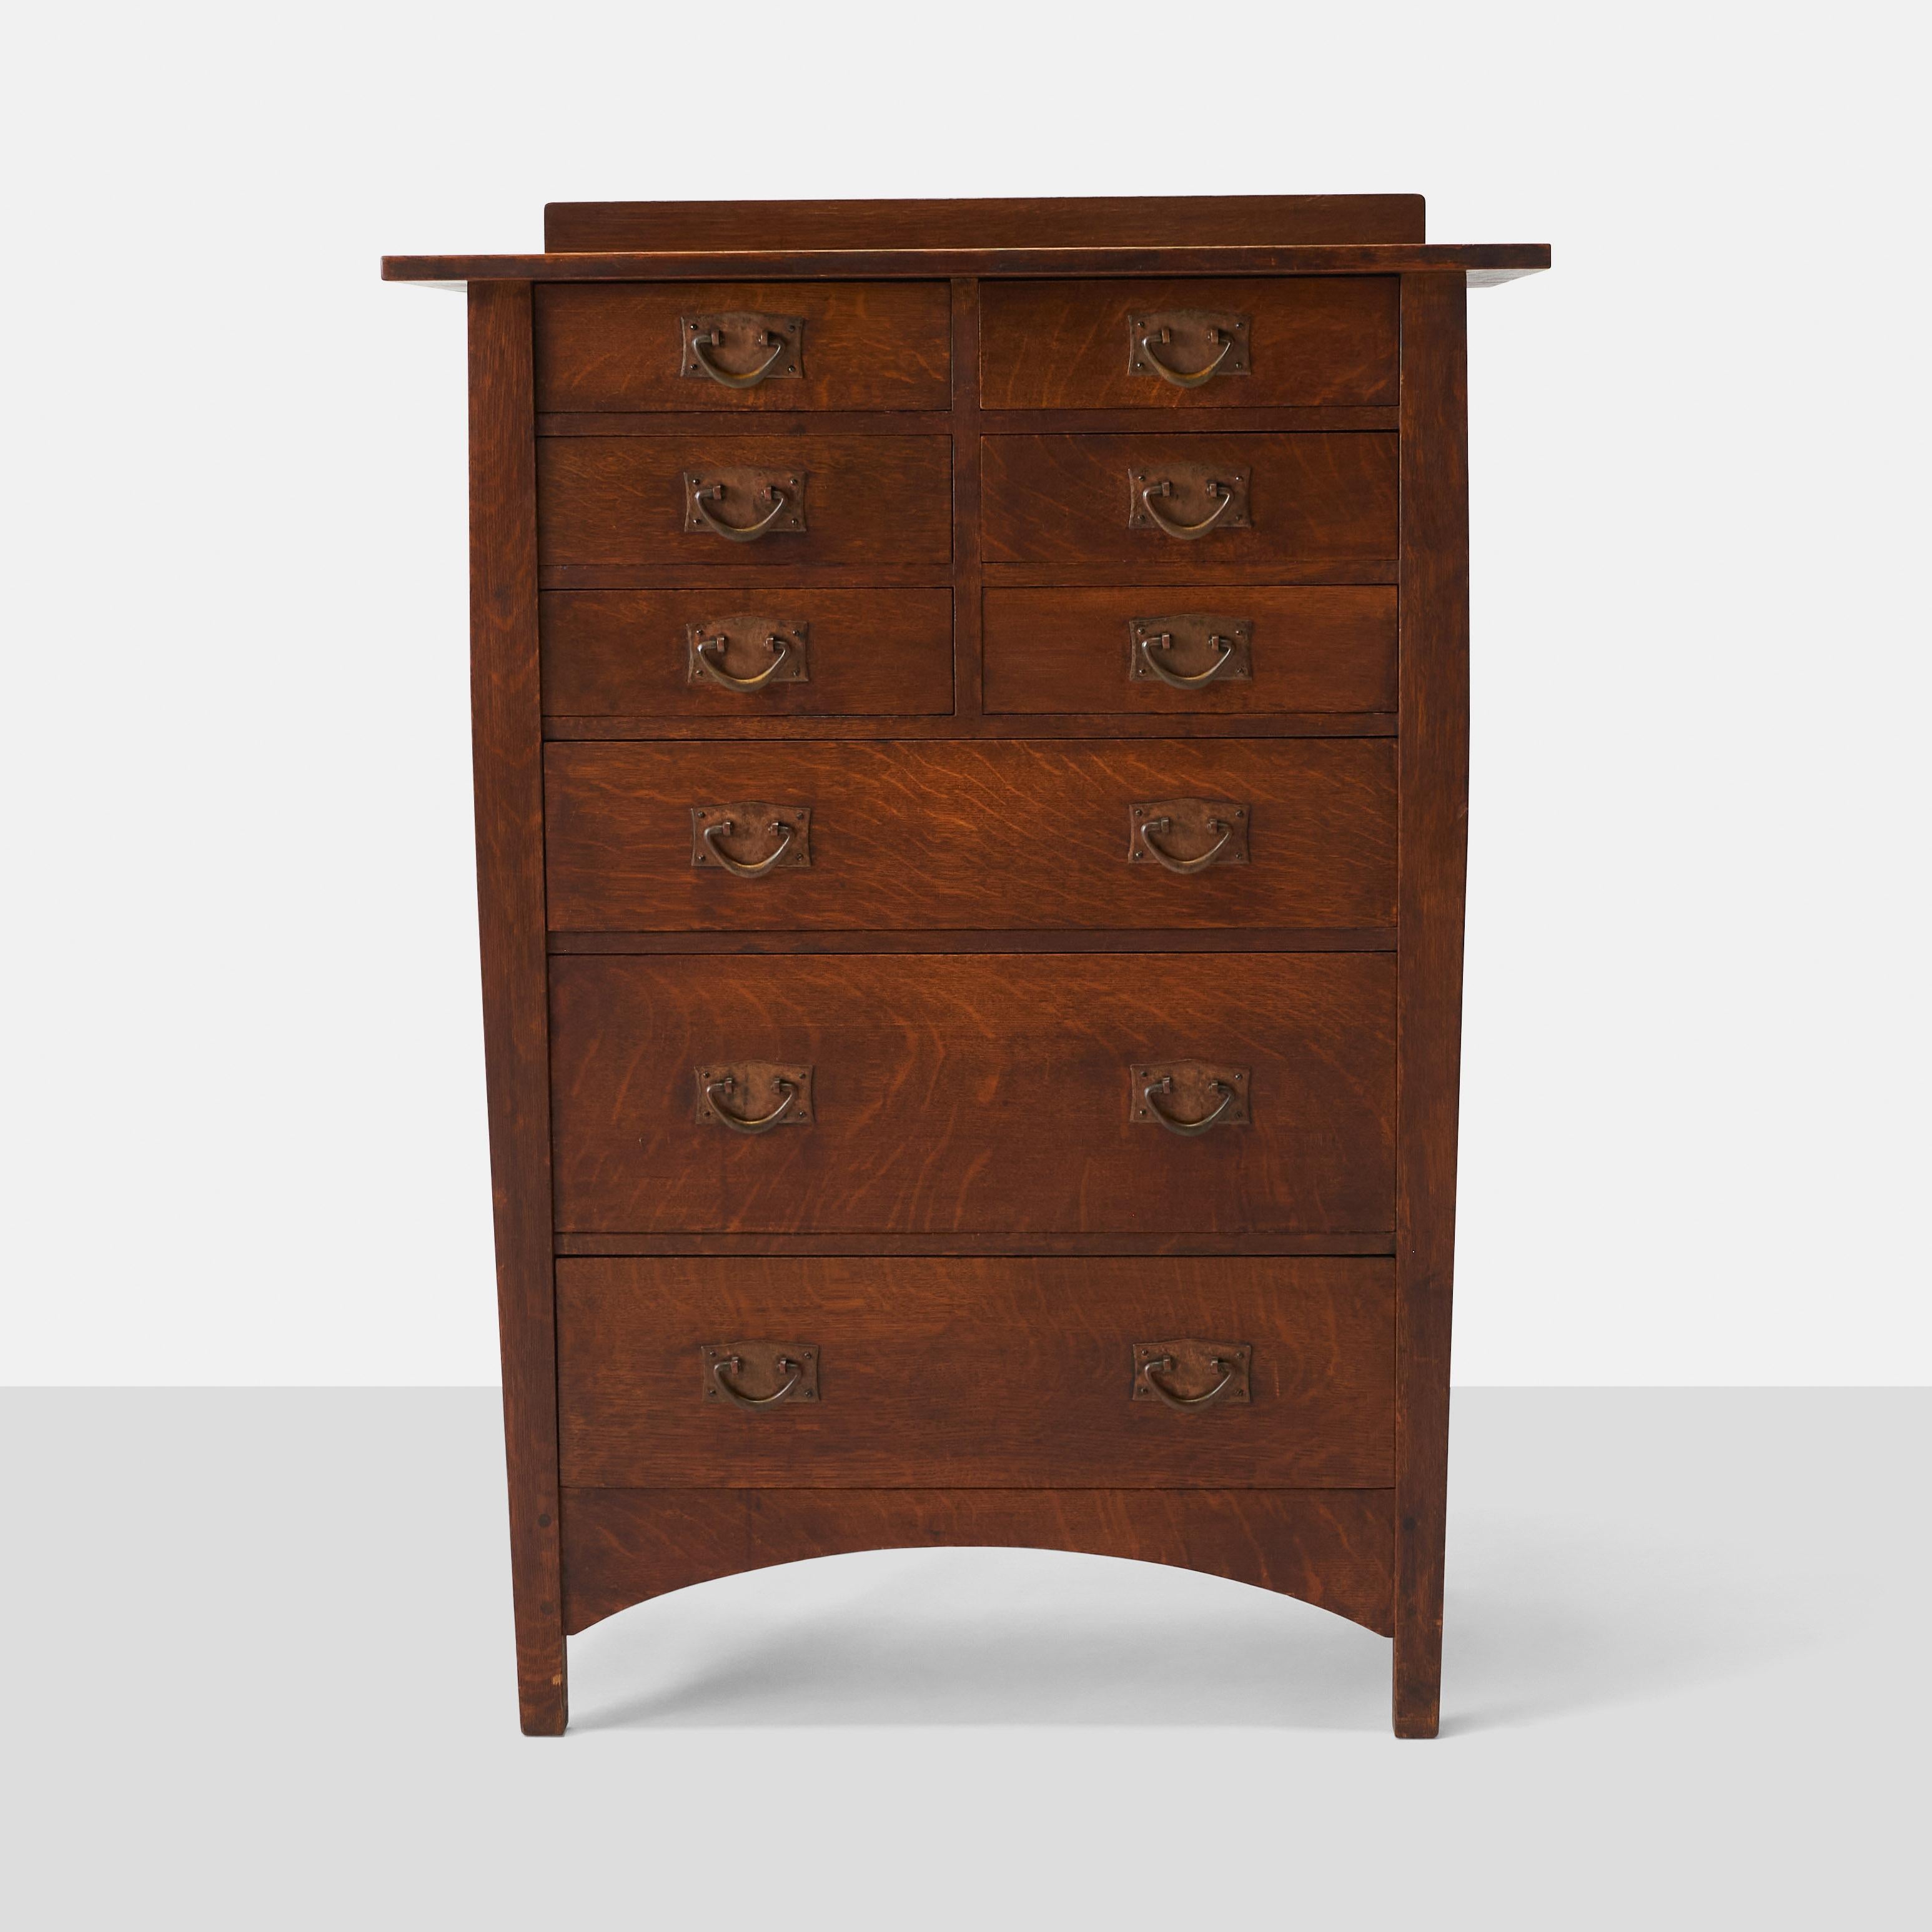 A nine drawer oak dresser with iron pulls.